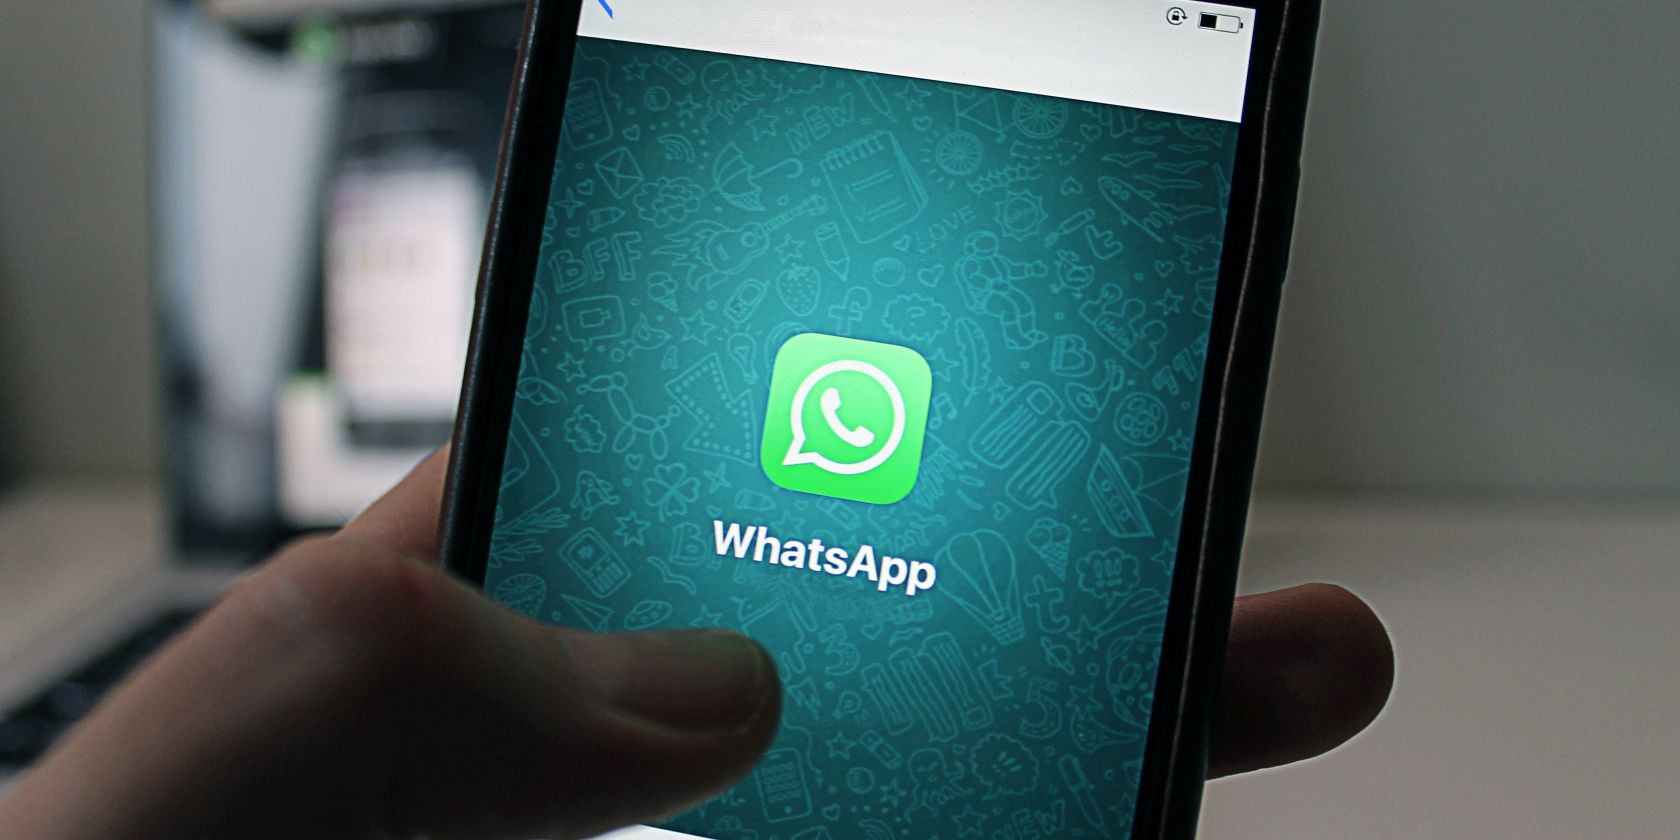 Hand holding phone with WhatsApp logo